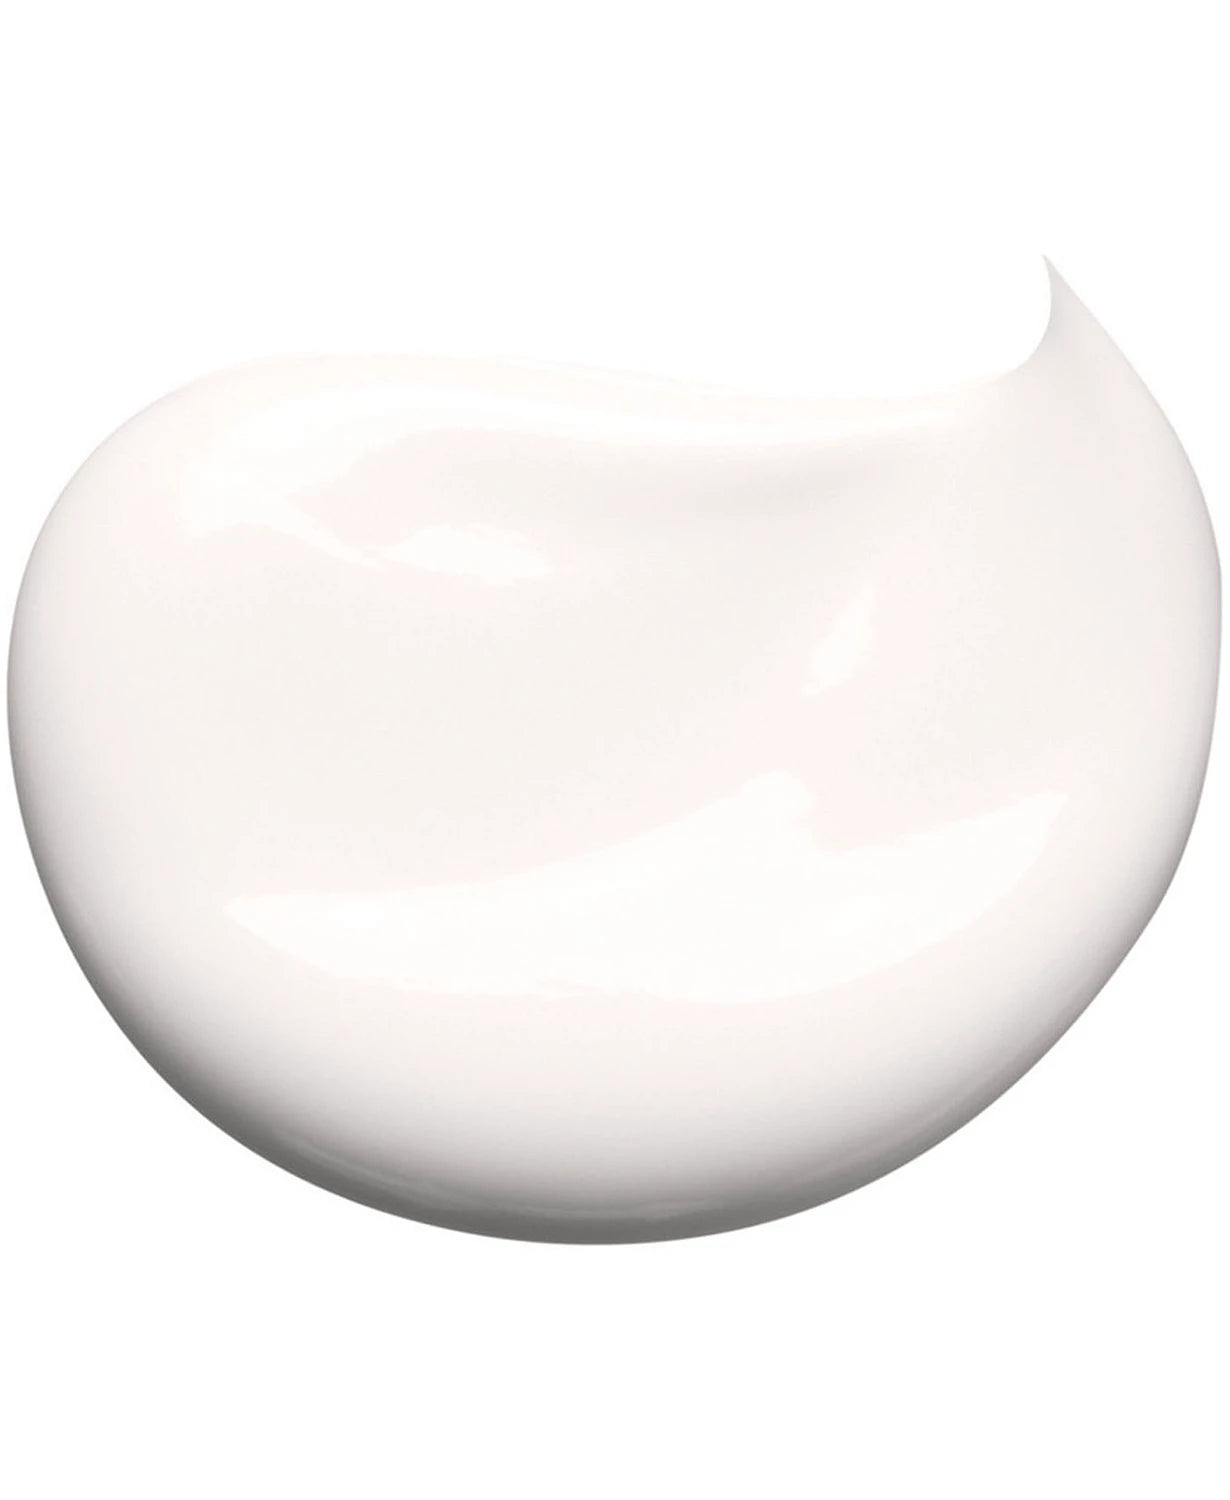 Clarins Super Restorative Night Age Spot Correcting Replenishing Cream